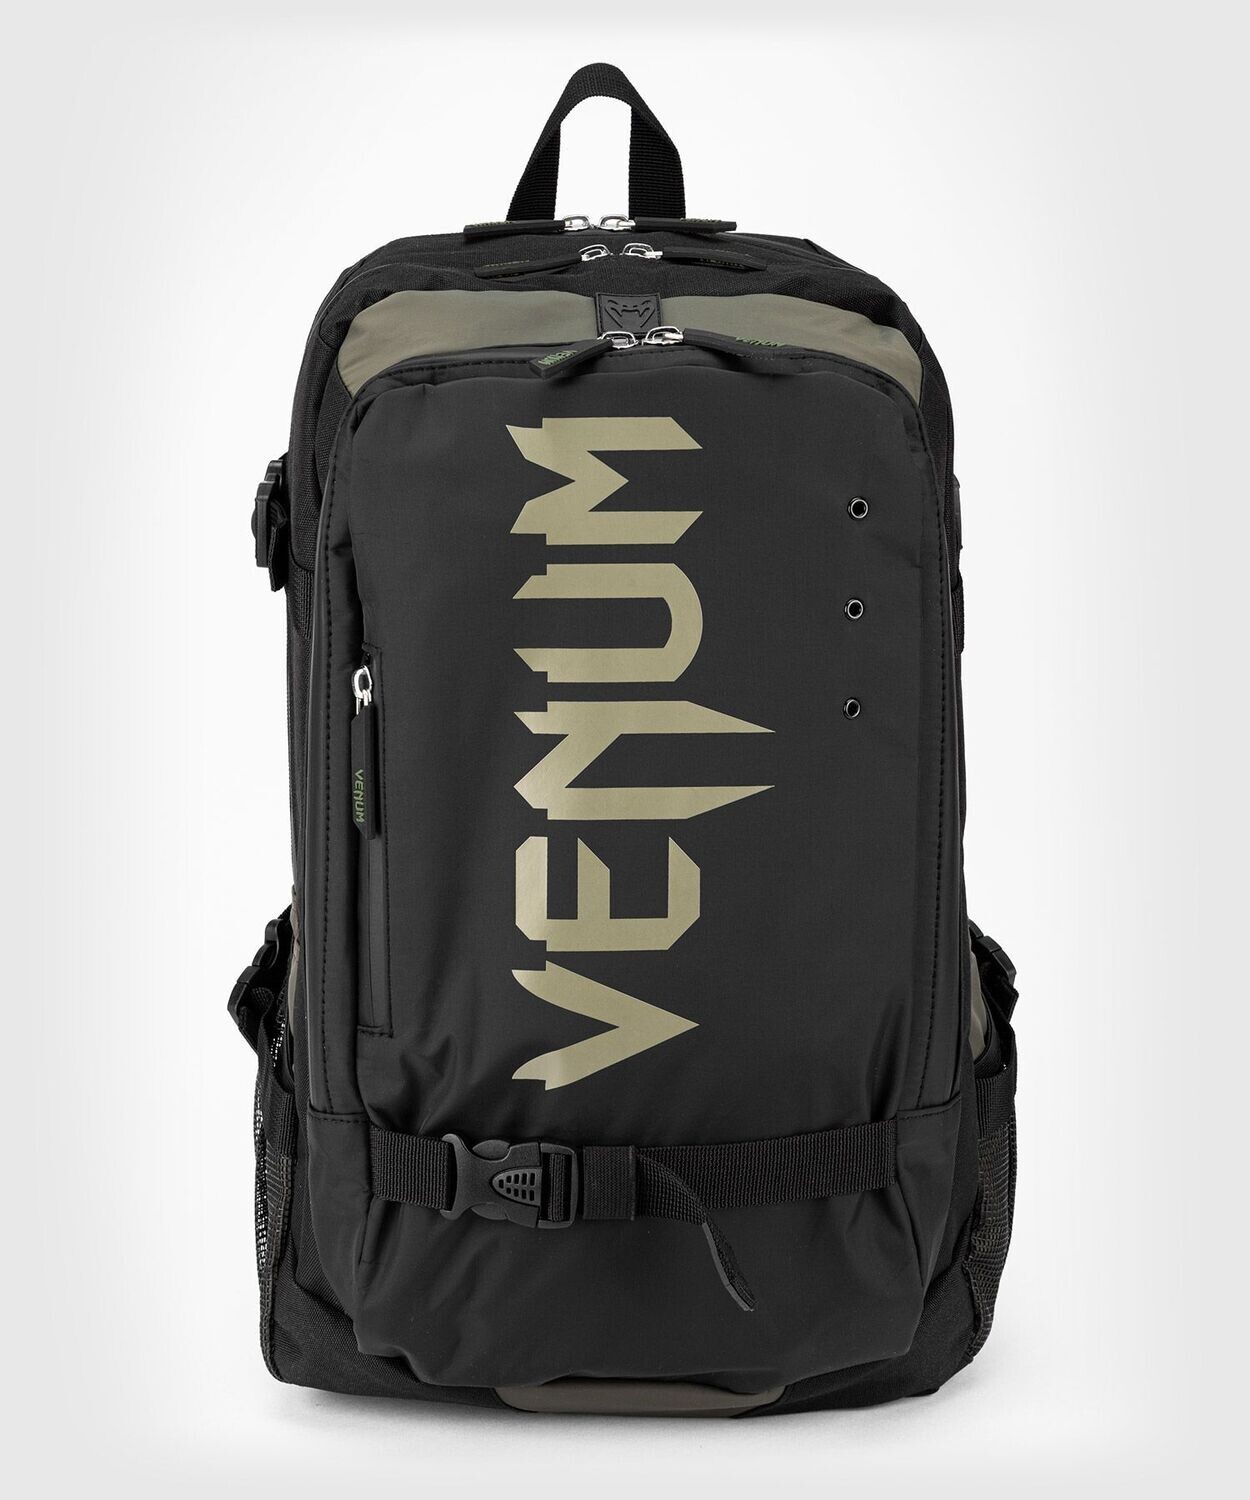 Venum Challenger Pro Evo Backpack, schwarz-khaki